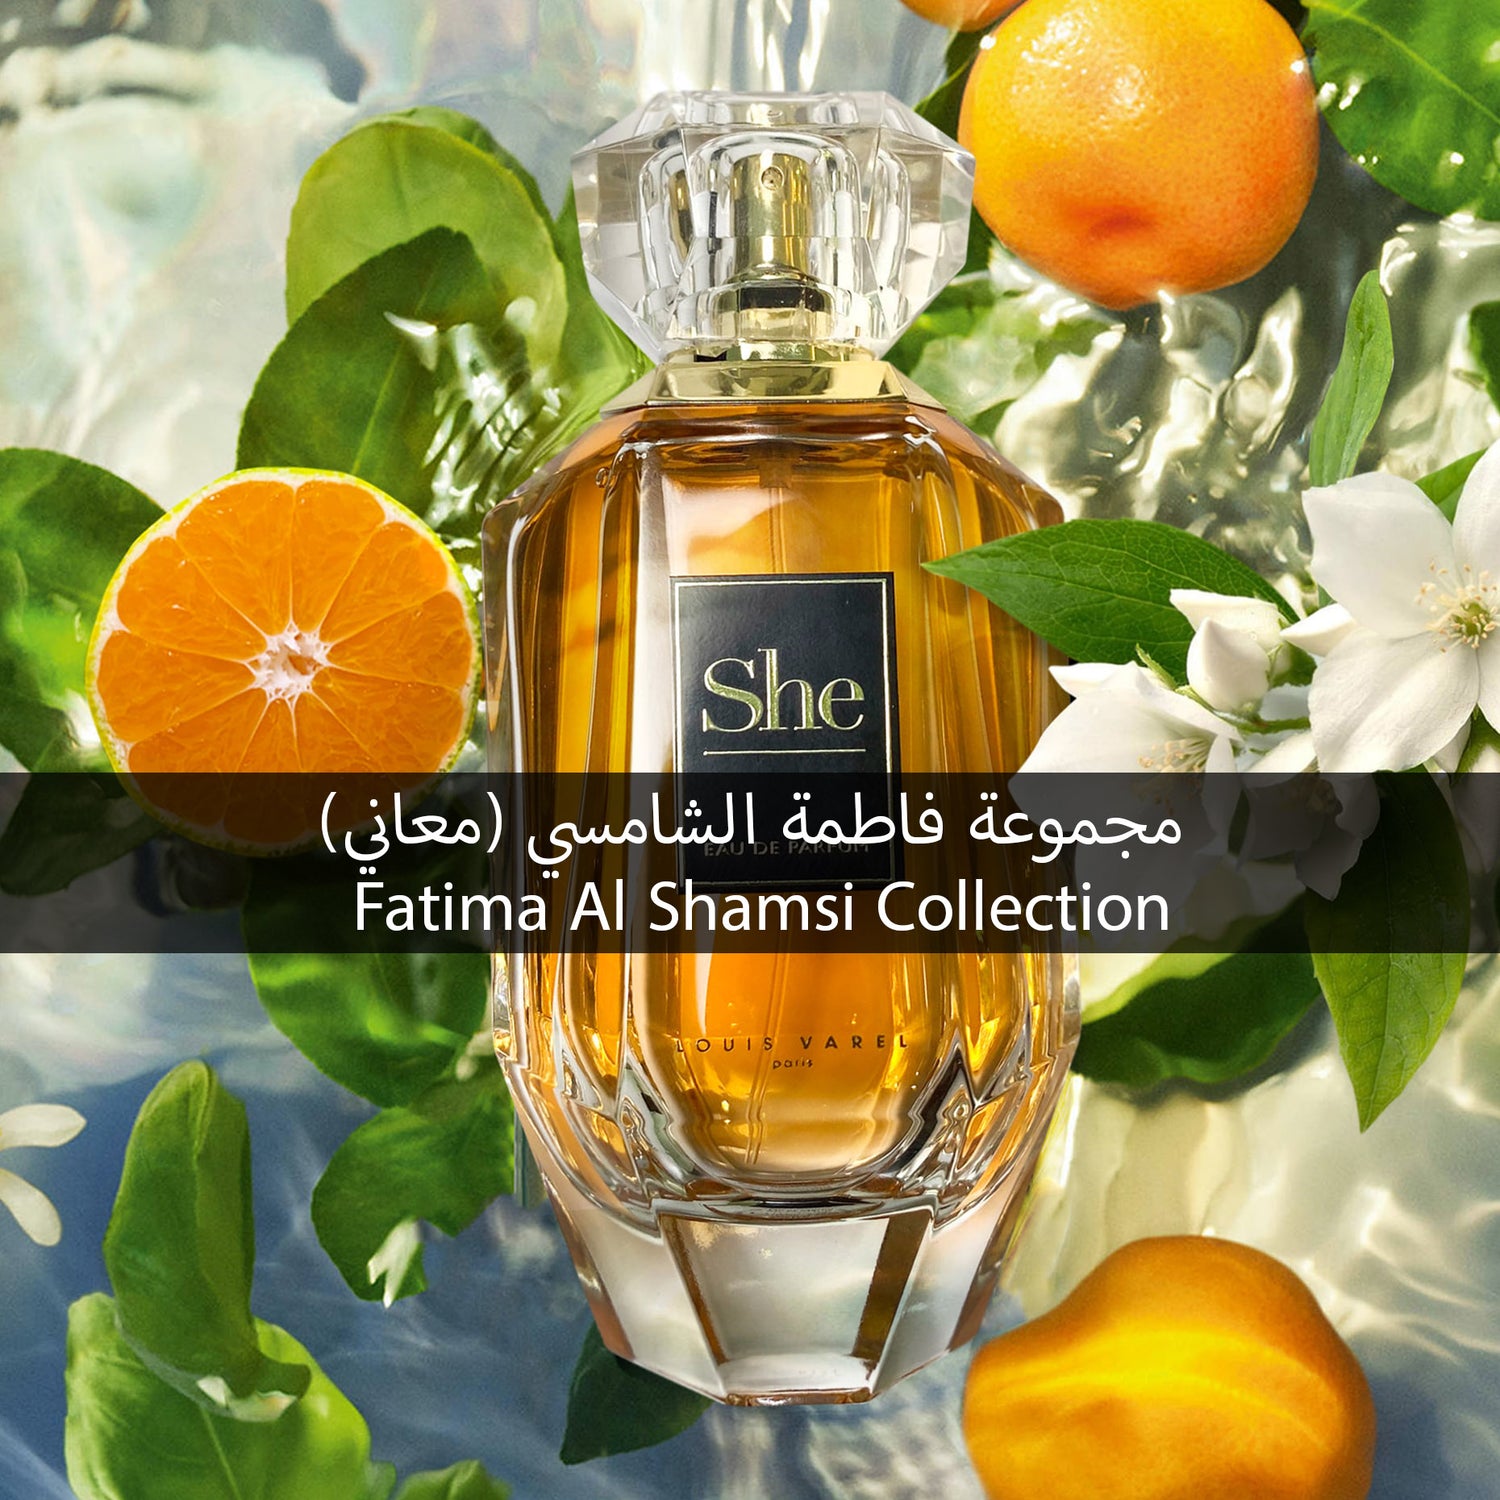 Fatima Al Shamsi Collection